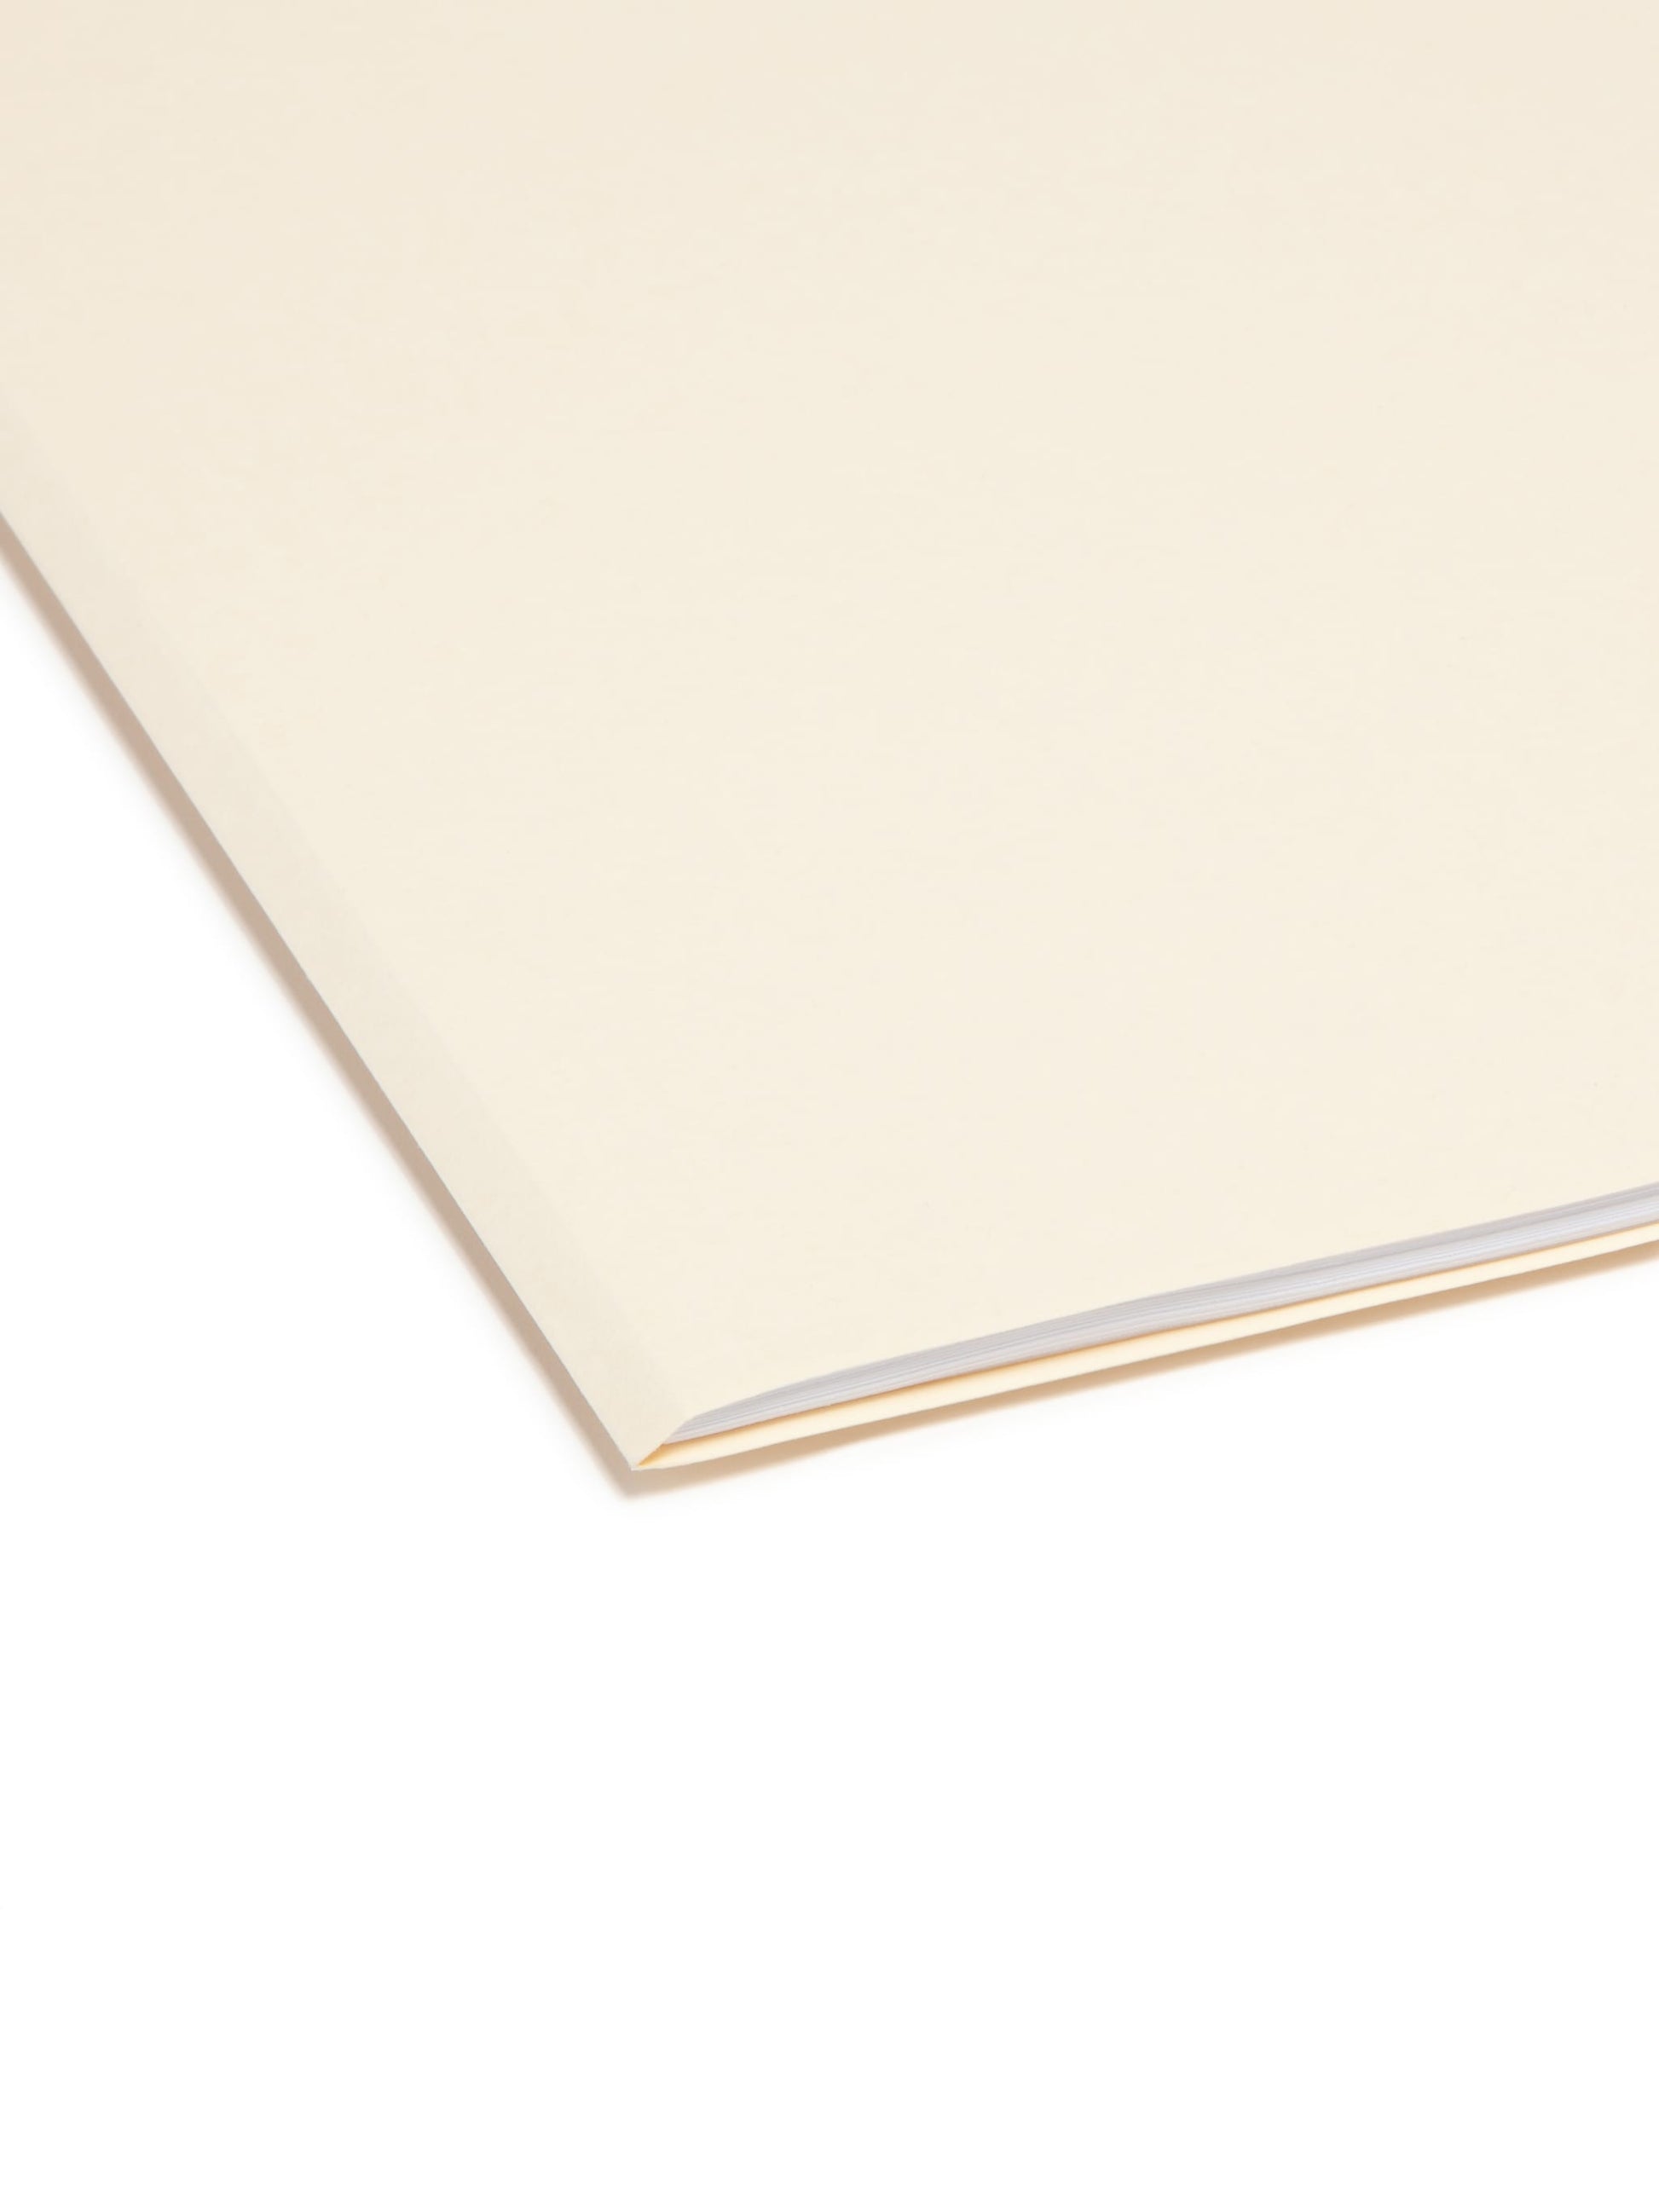 Standard File Folders, 2/5-Cut Right Tab, Manila Color, Legal Size, Set of 100, 086486153850